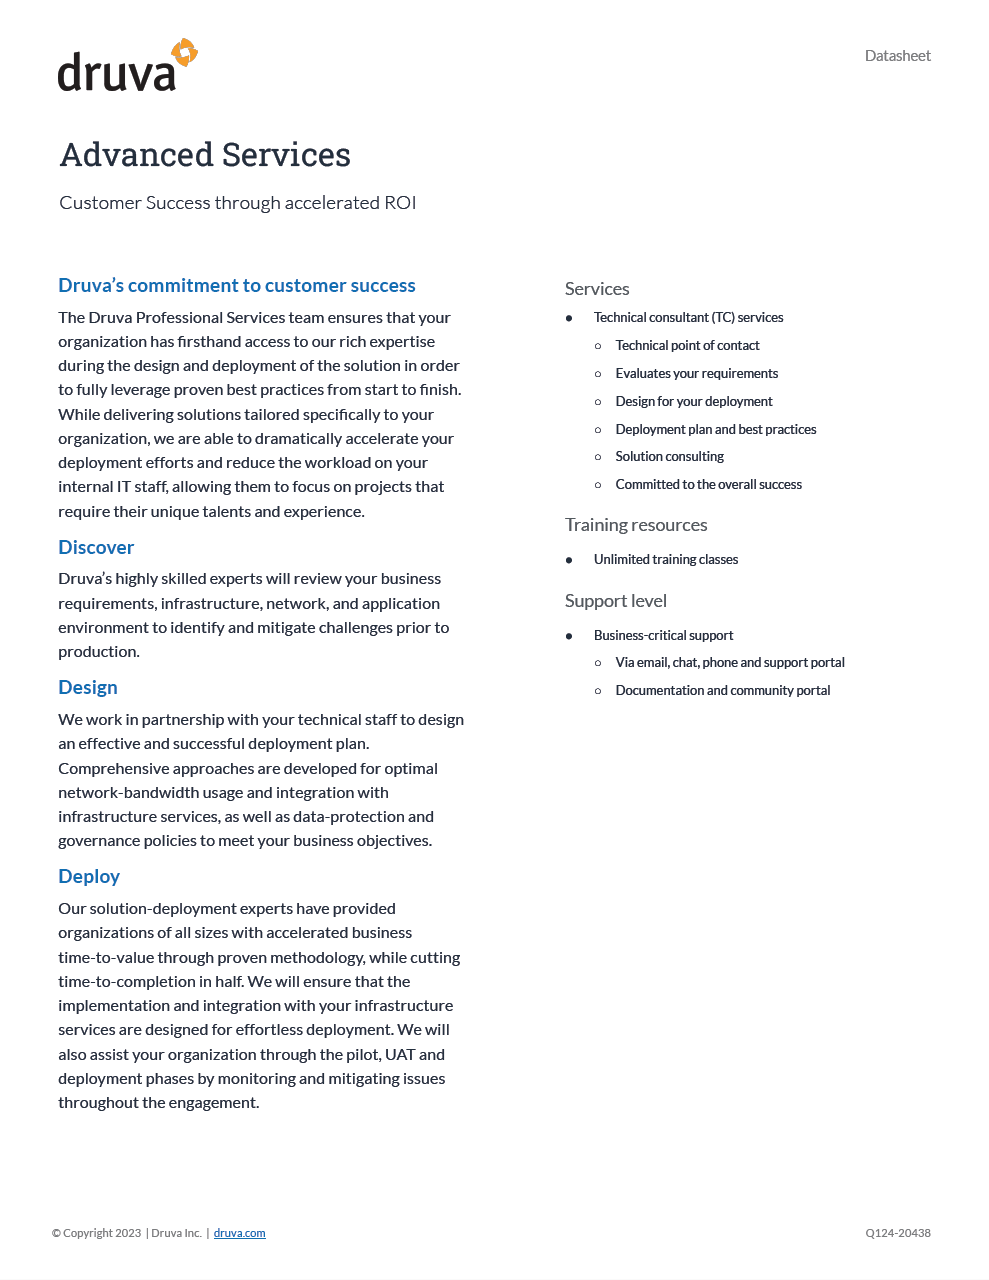 Advanced Services